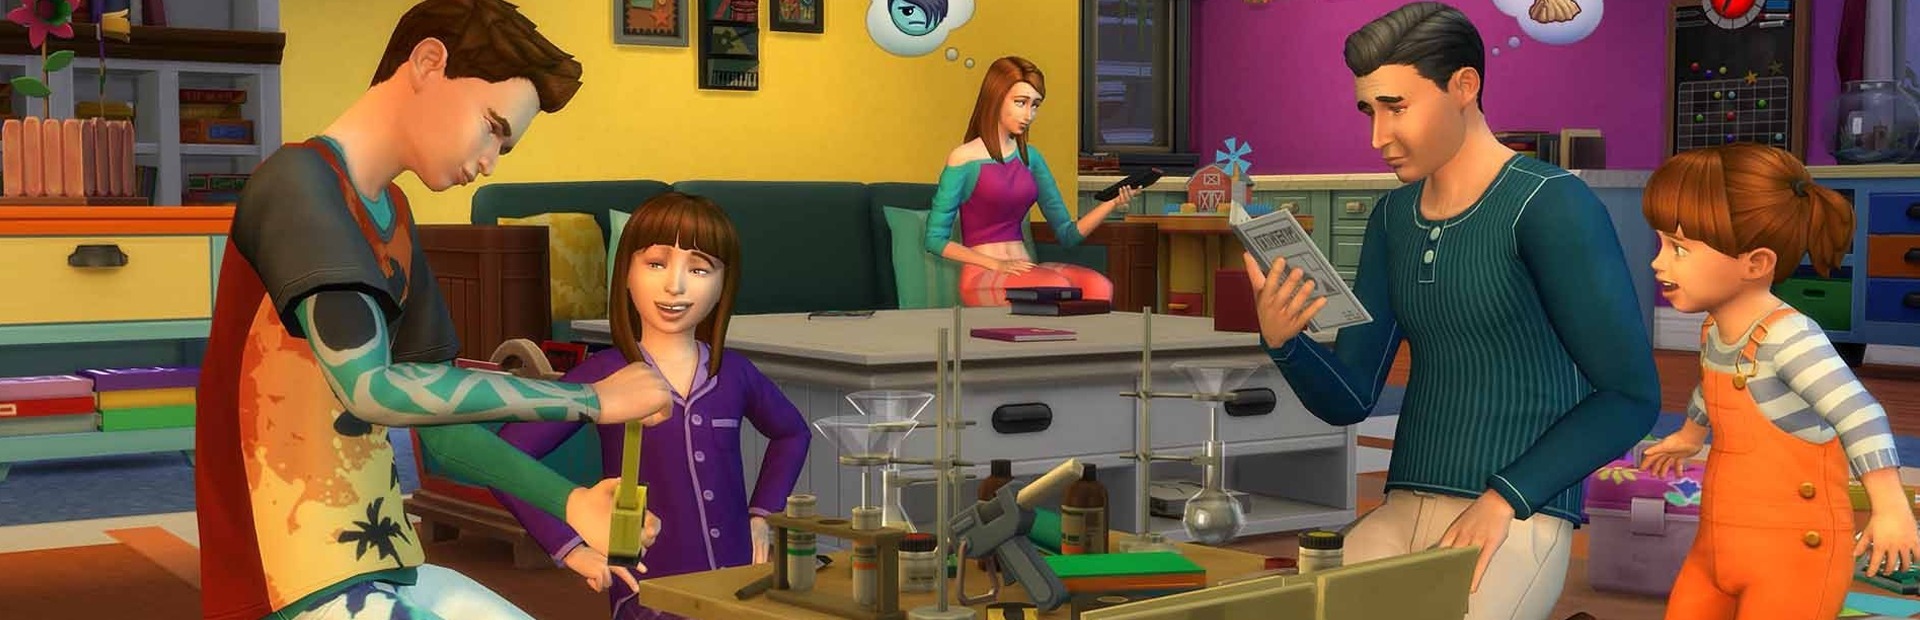 De Sims 4 Ouderschap PS4